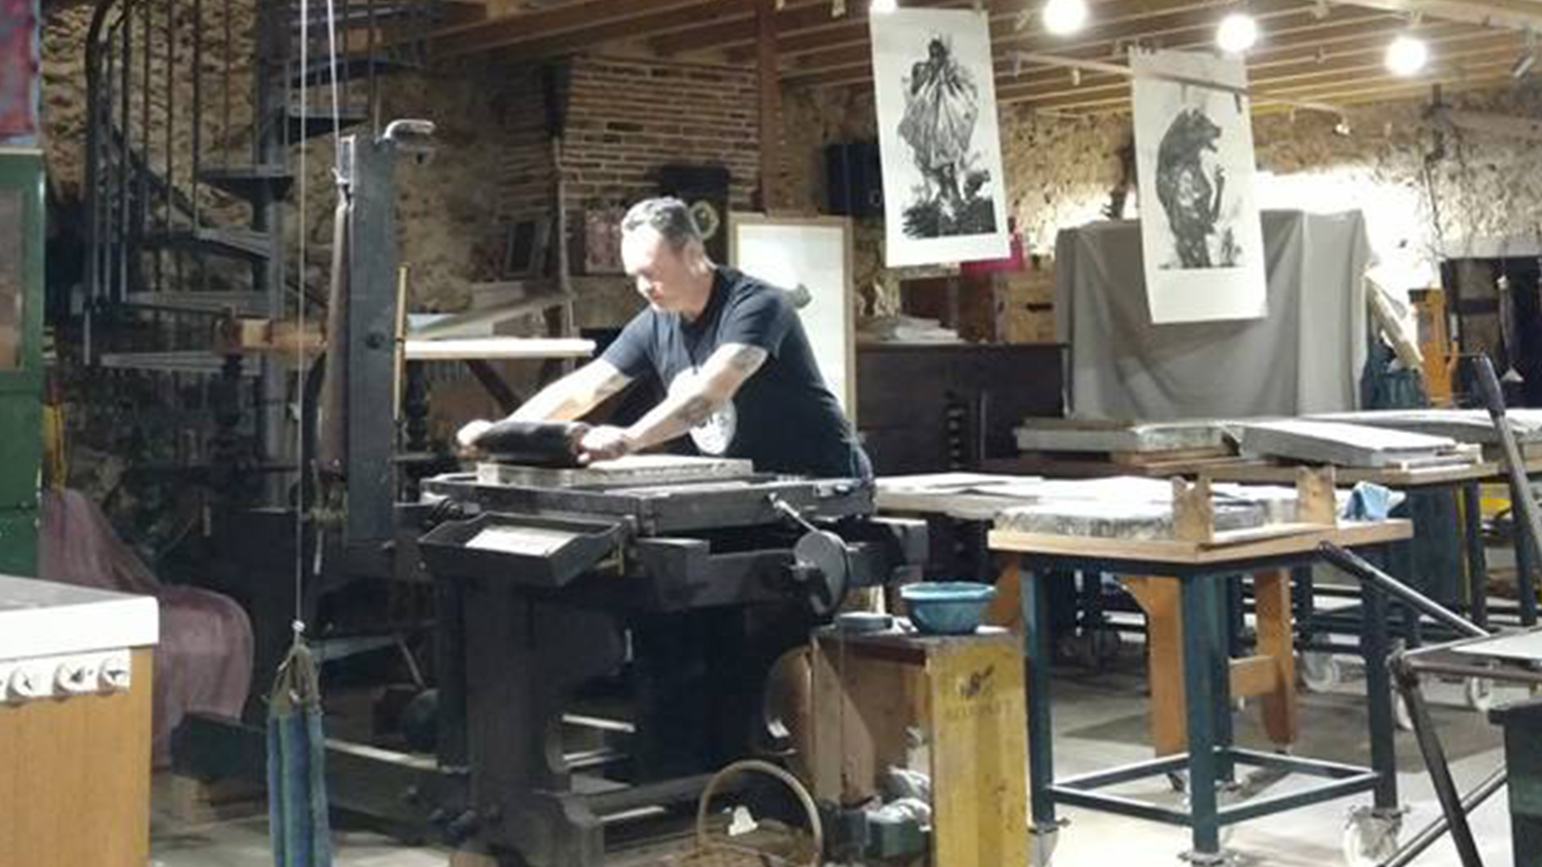 Photograph of a person at a printing press